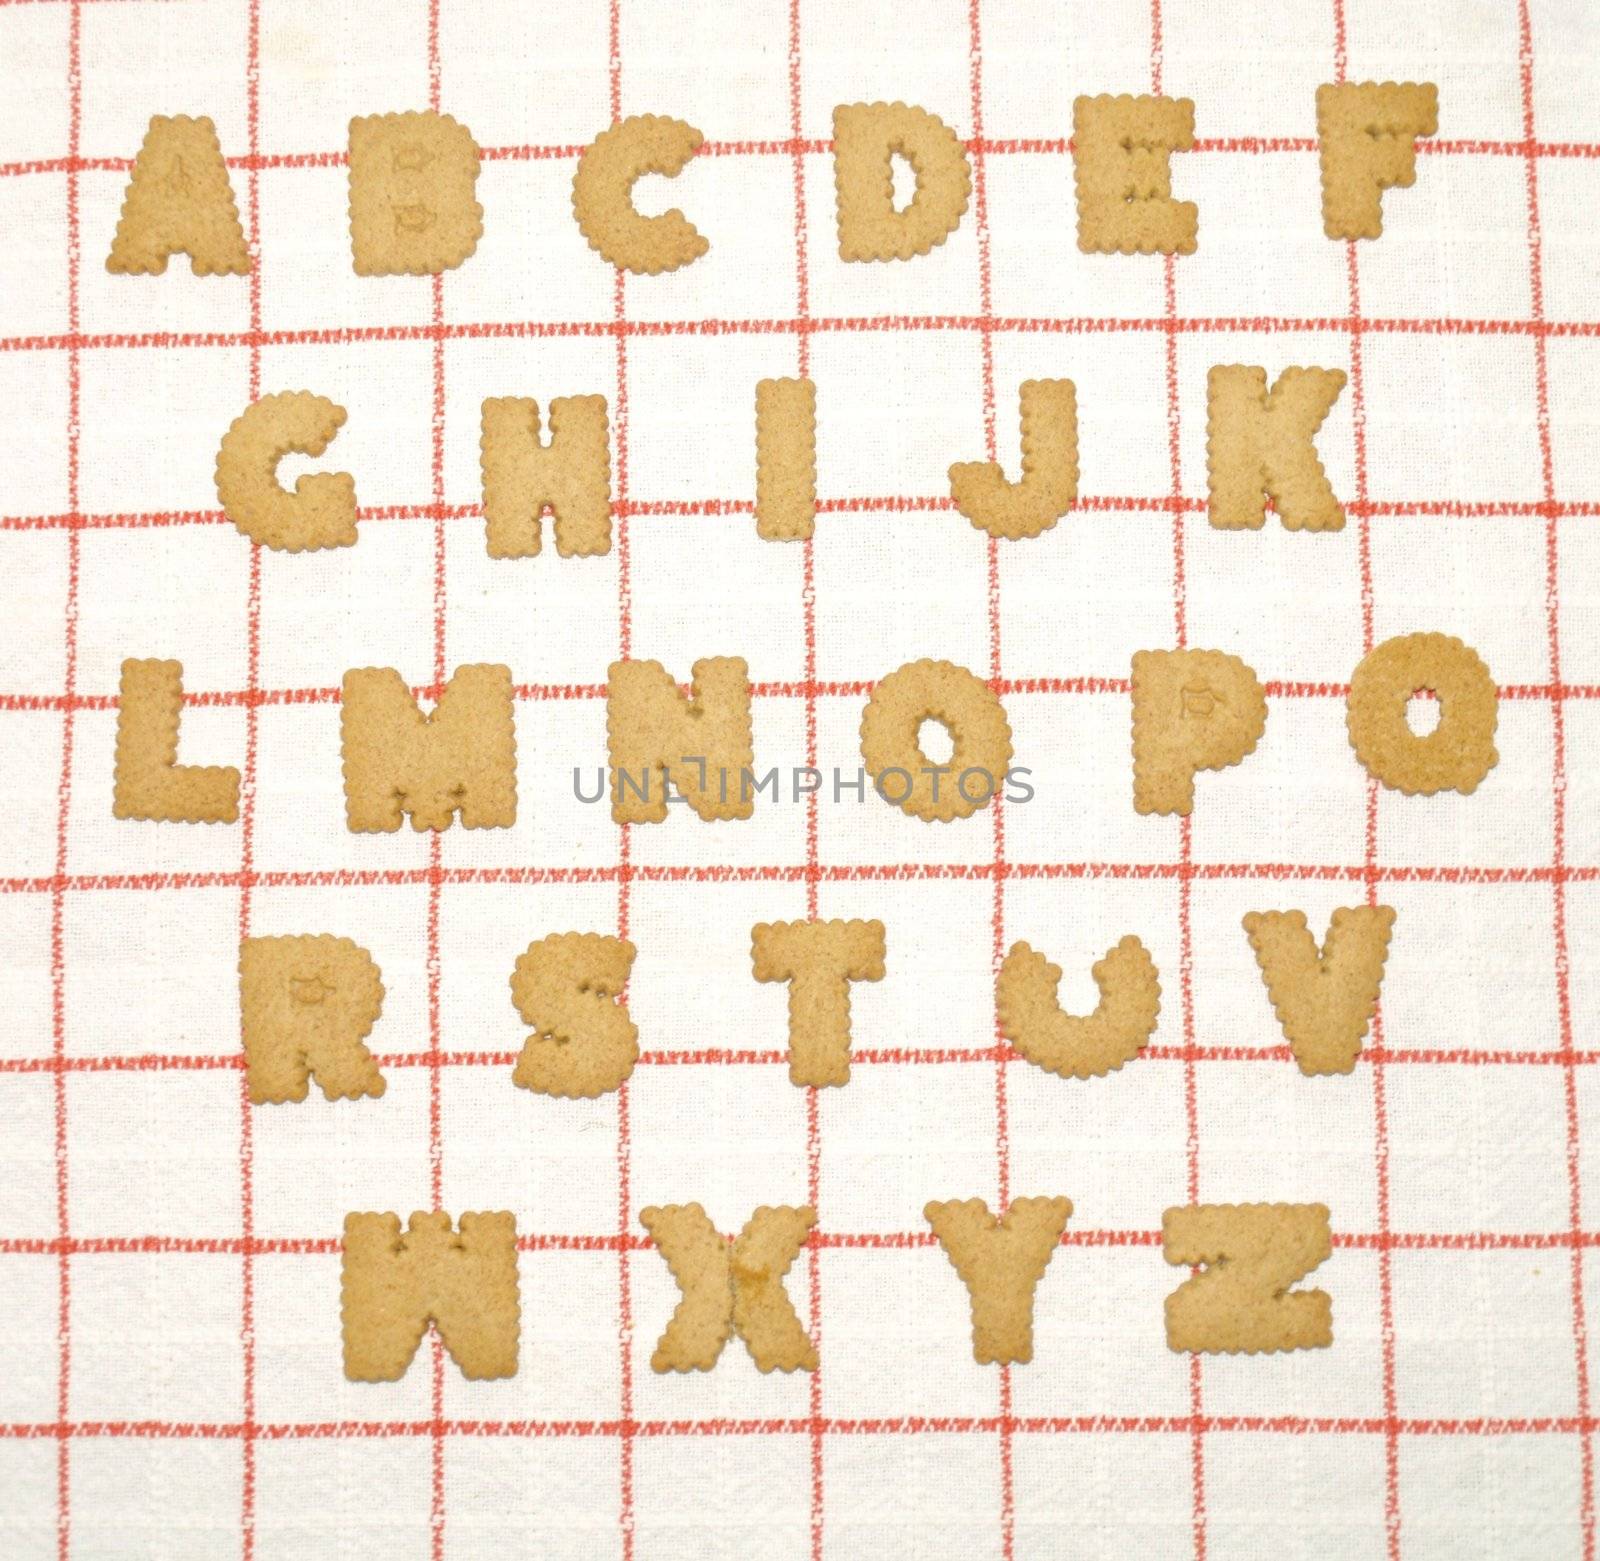 the alphabet by viviolsen